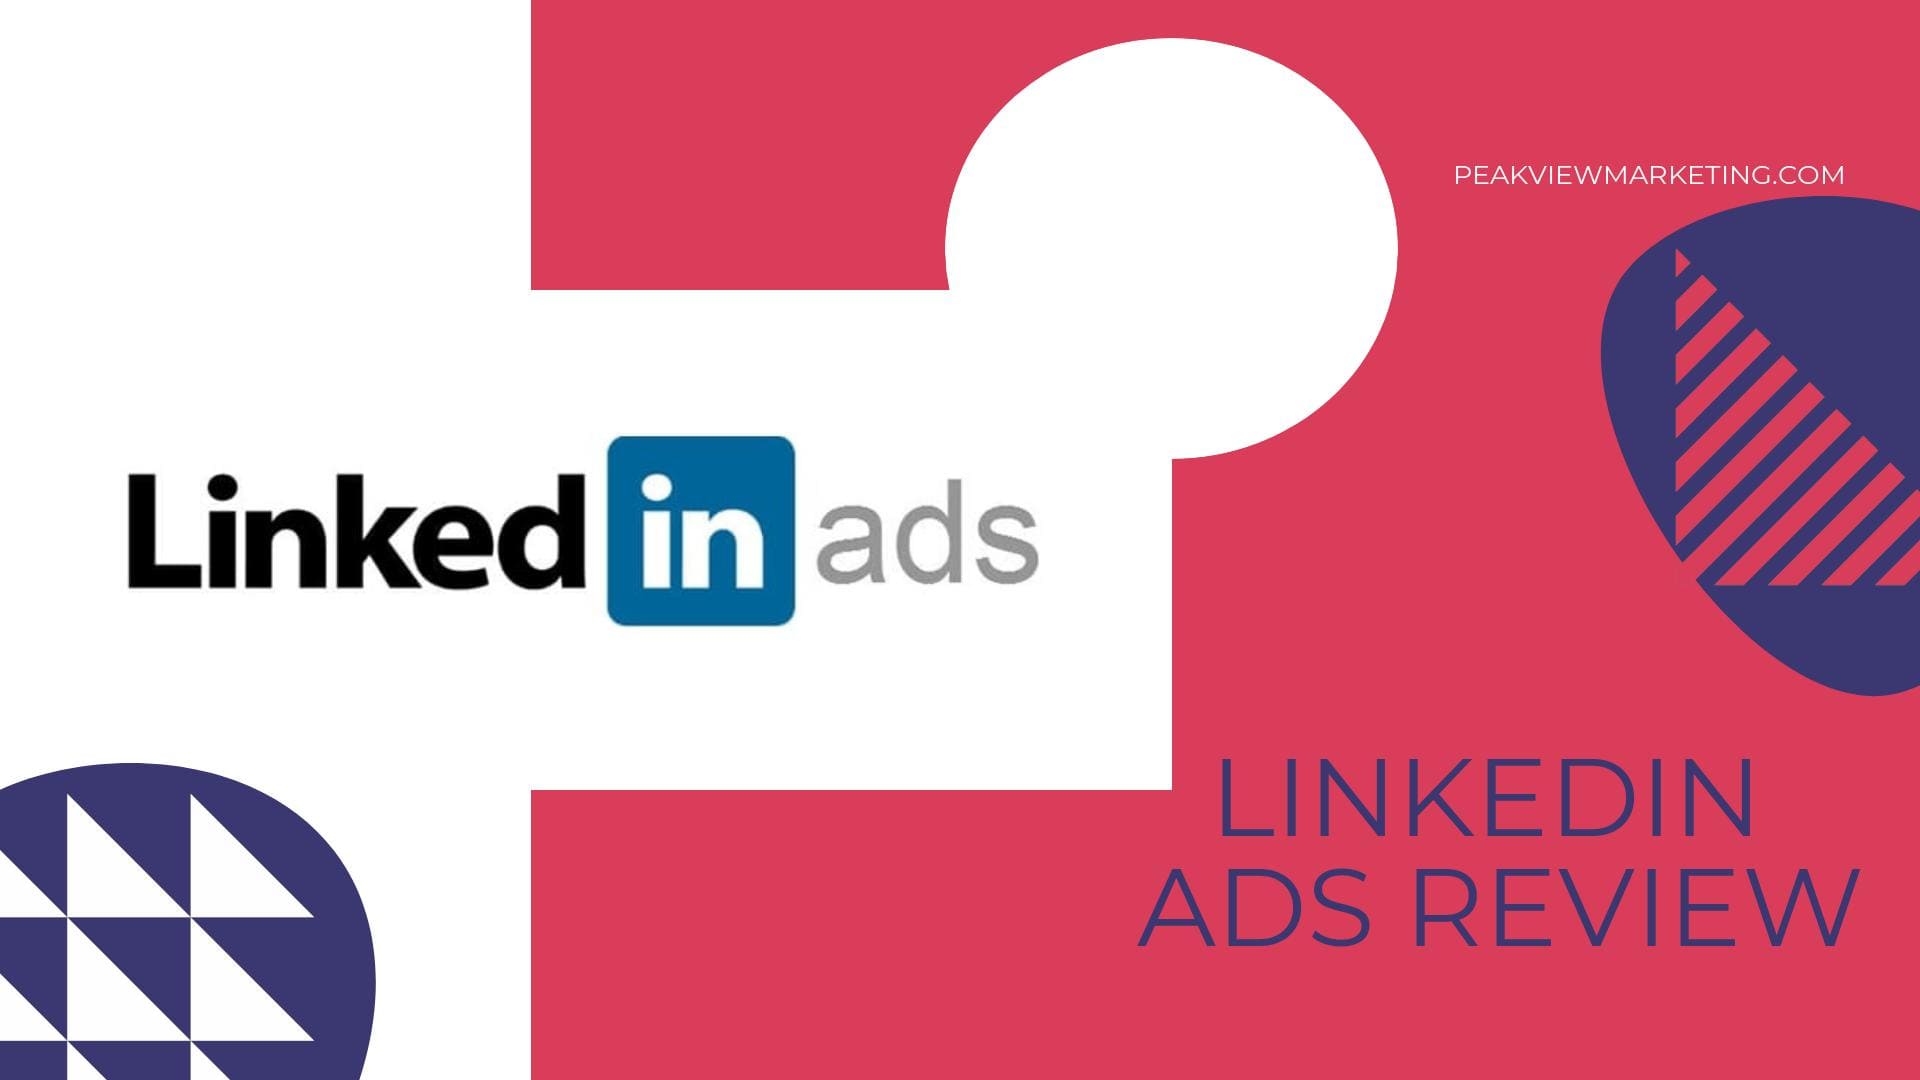 LinkedIn Ads Review Image